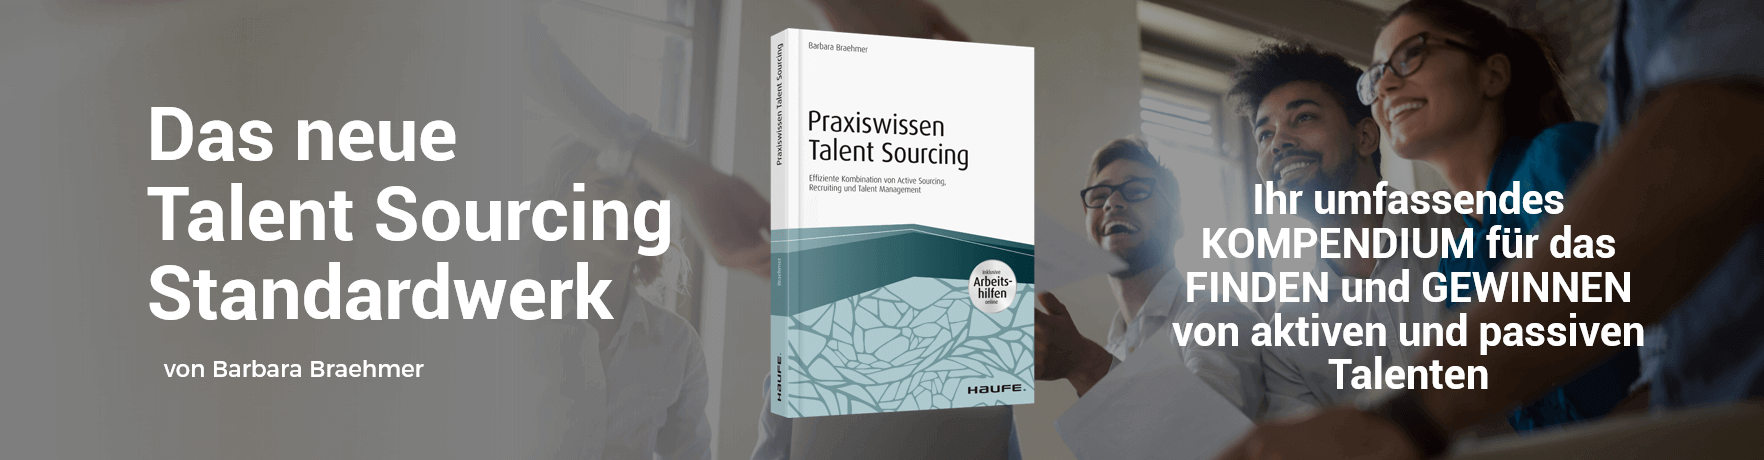 Praxiswissen Talent Sourcing by Barbara Braehmer